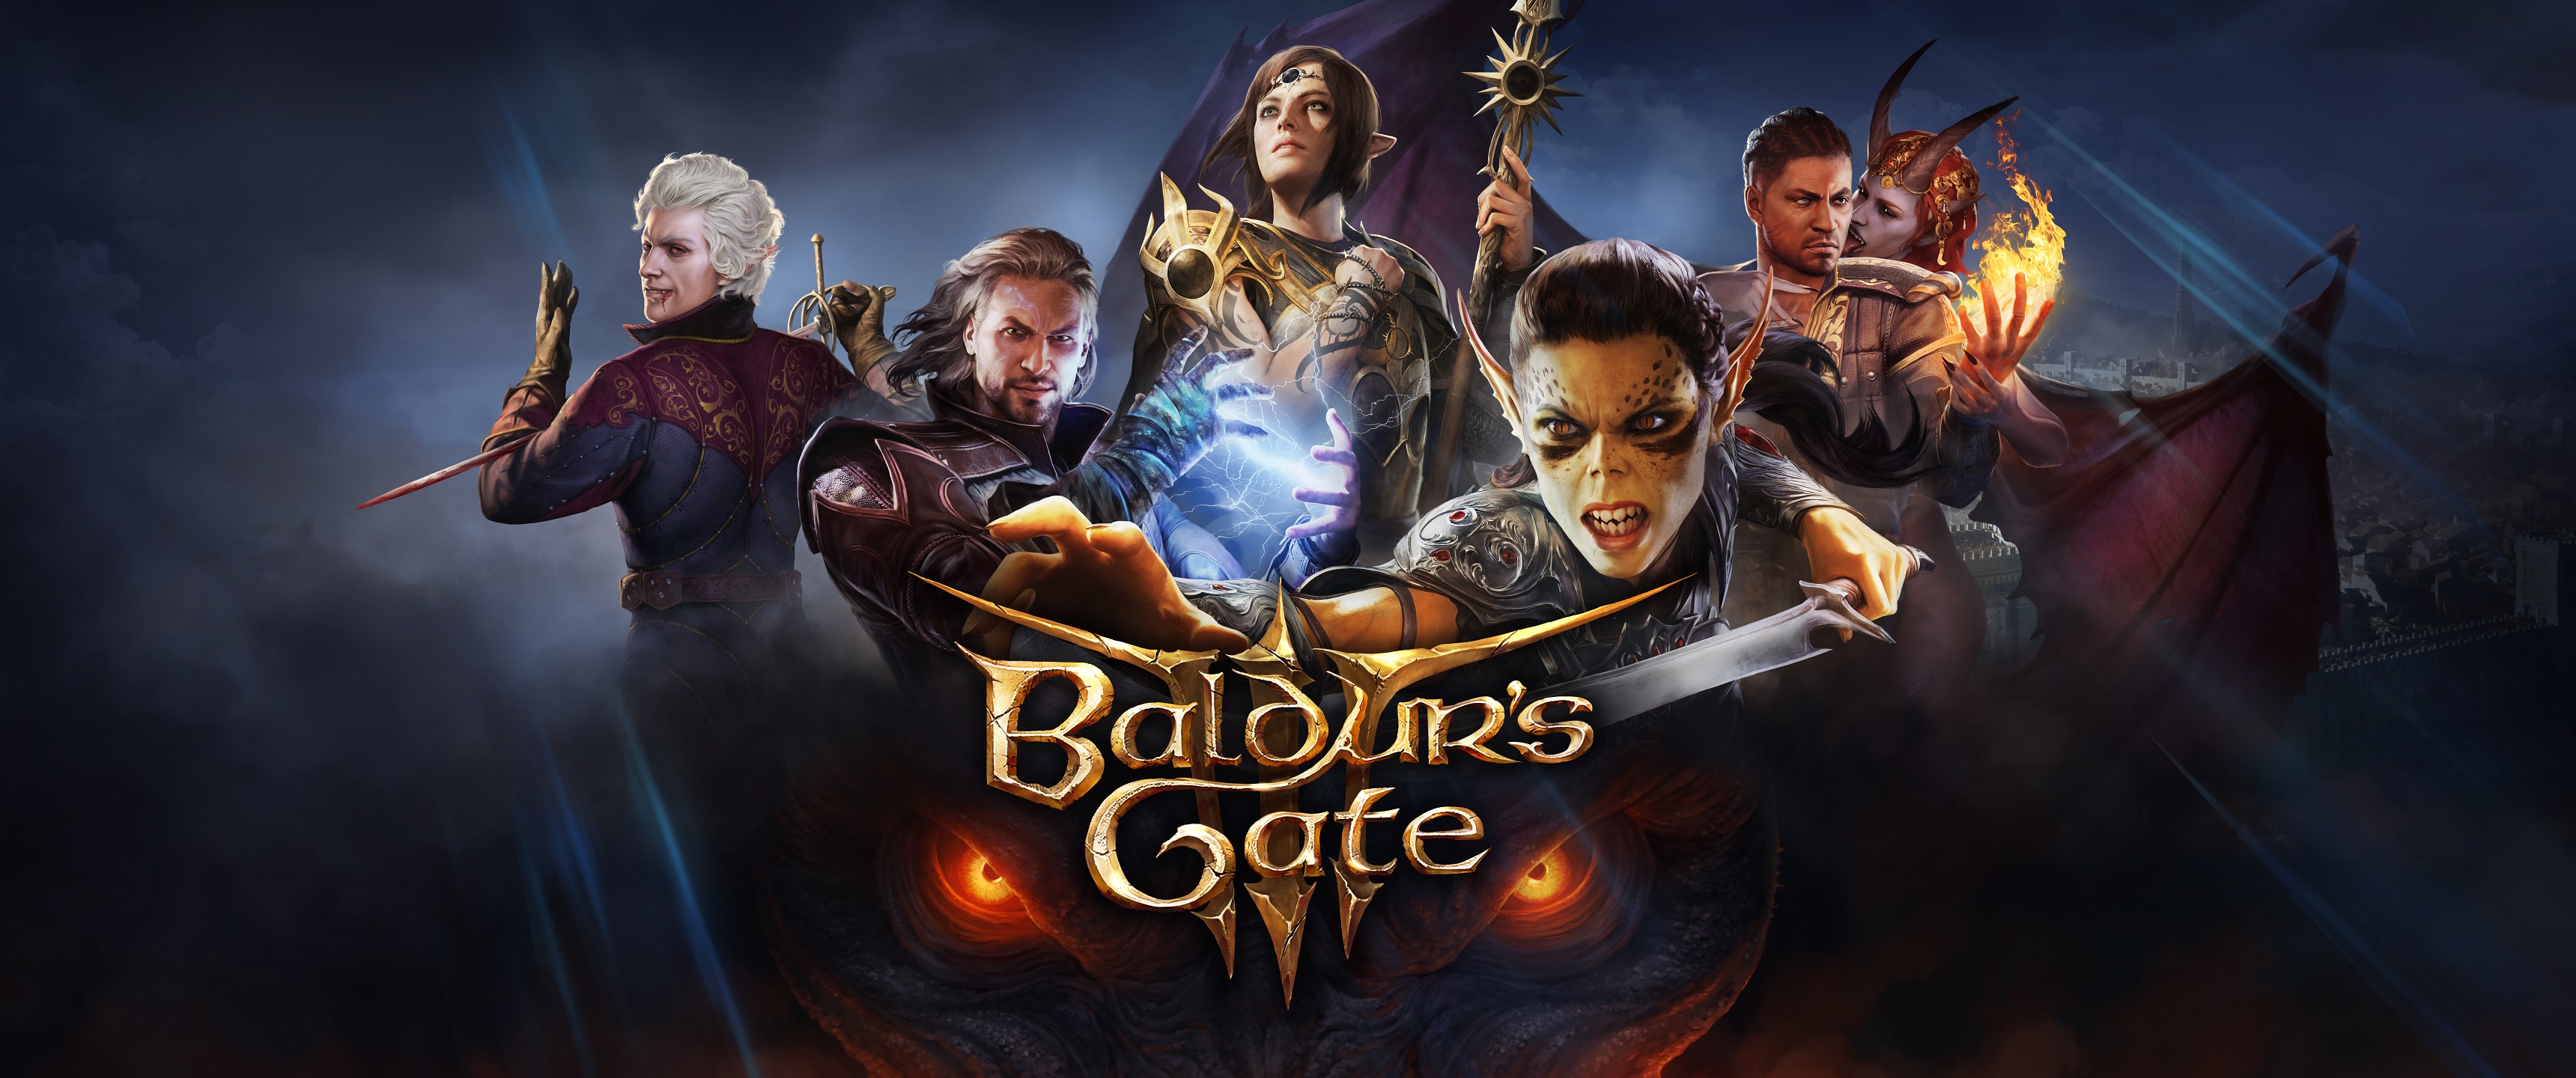 Baldurs Gate 3 Larian Studios Wizards Of The Coast PC Gaming Fantasy Art Video Game Art 3440x1440